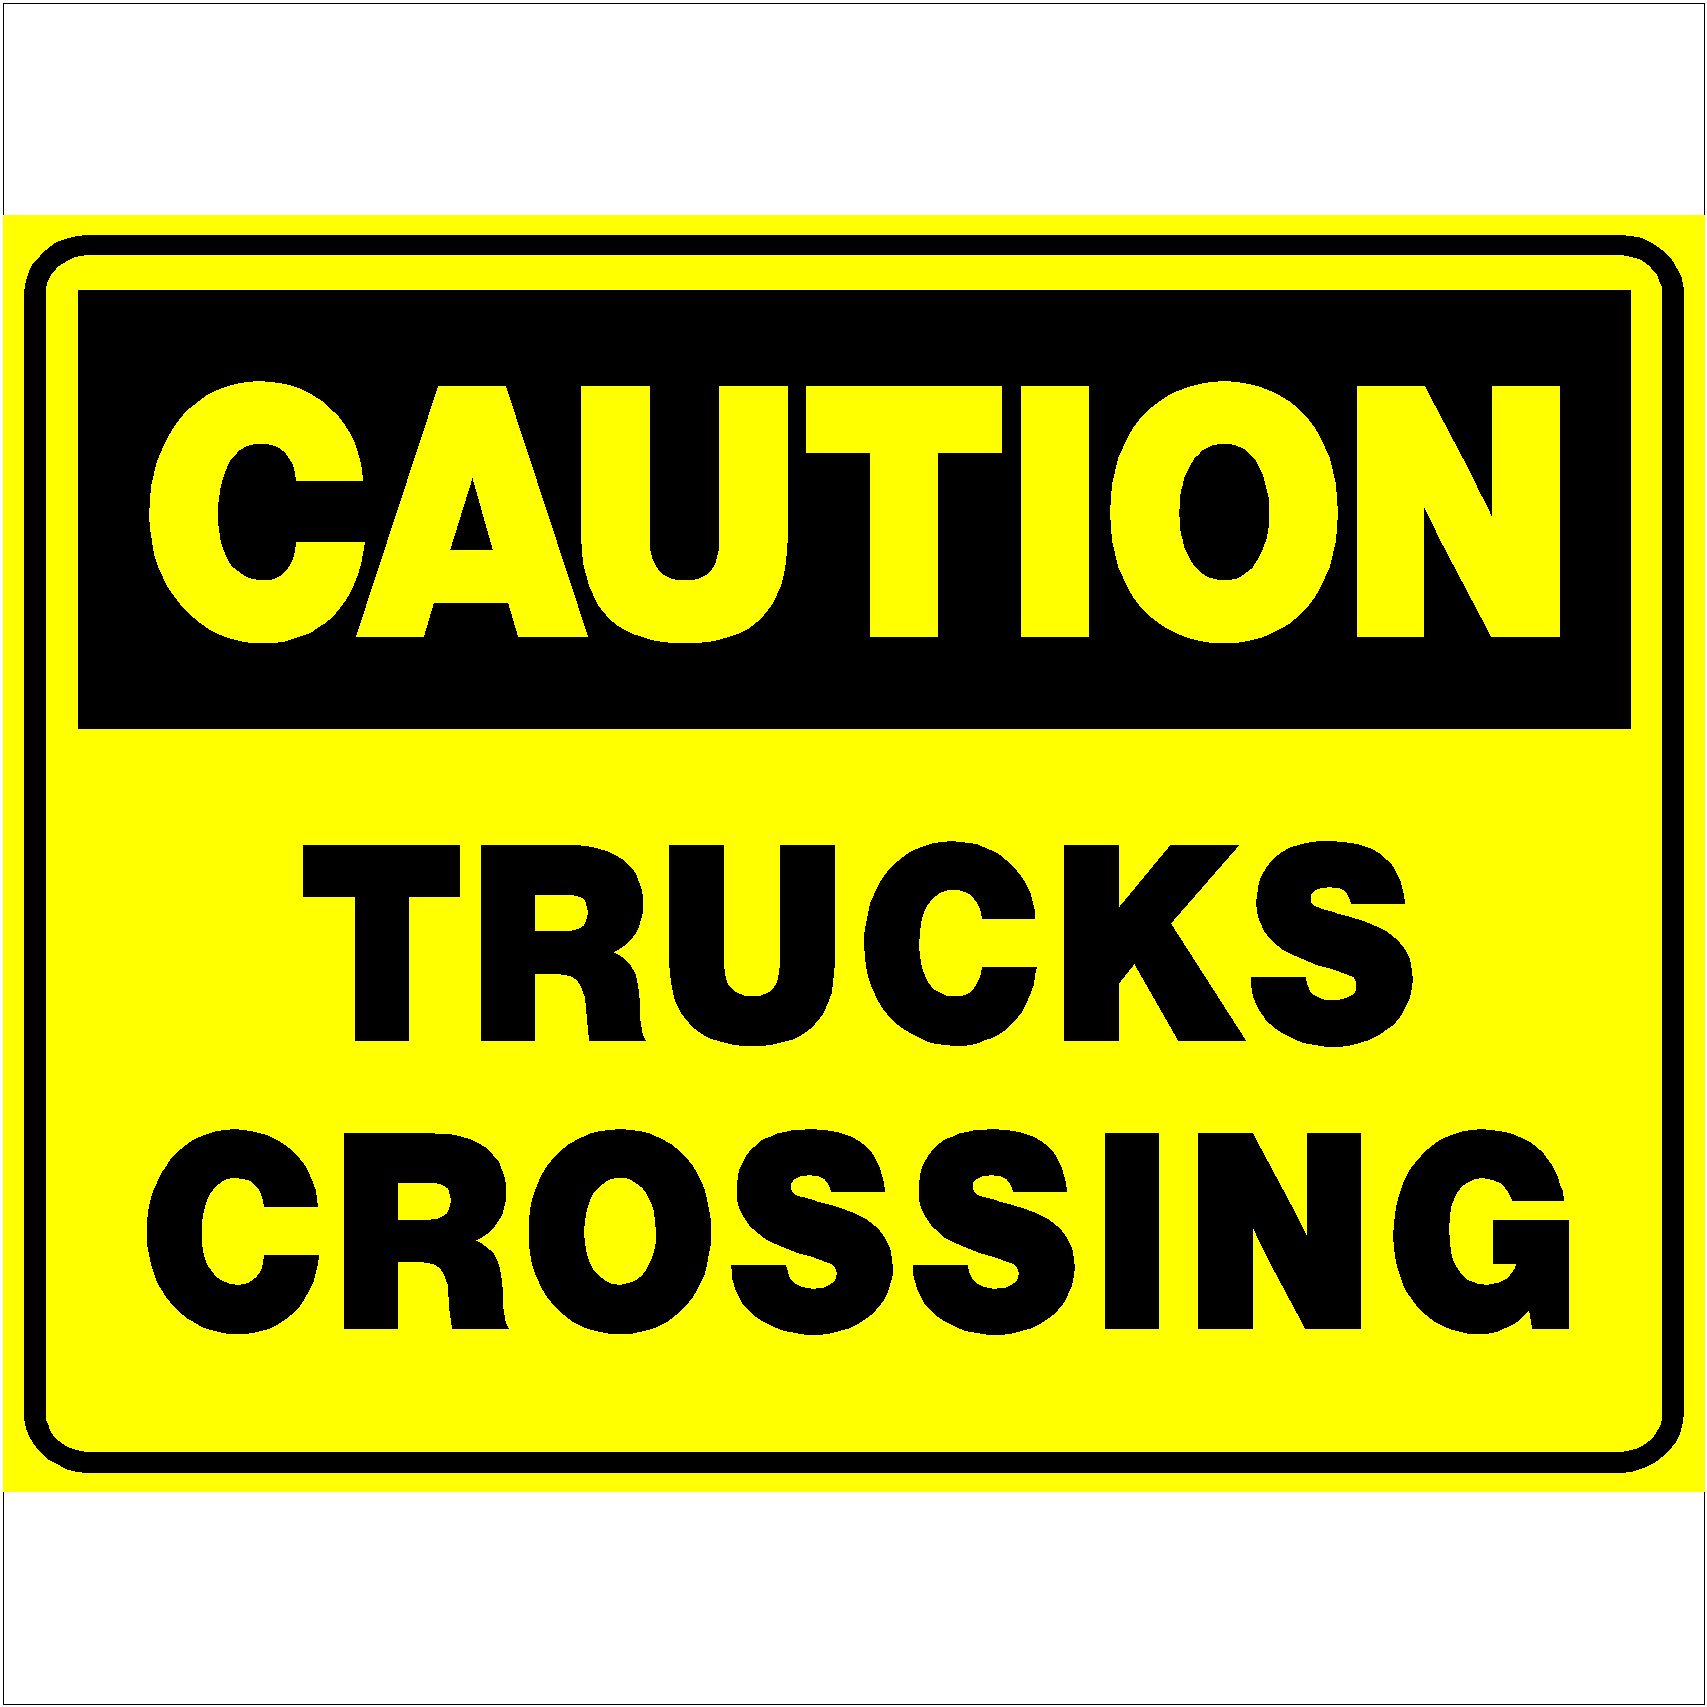 Caution Trucks Crossing